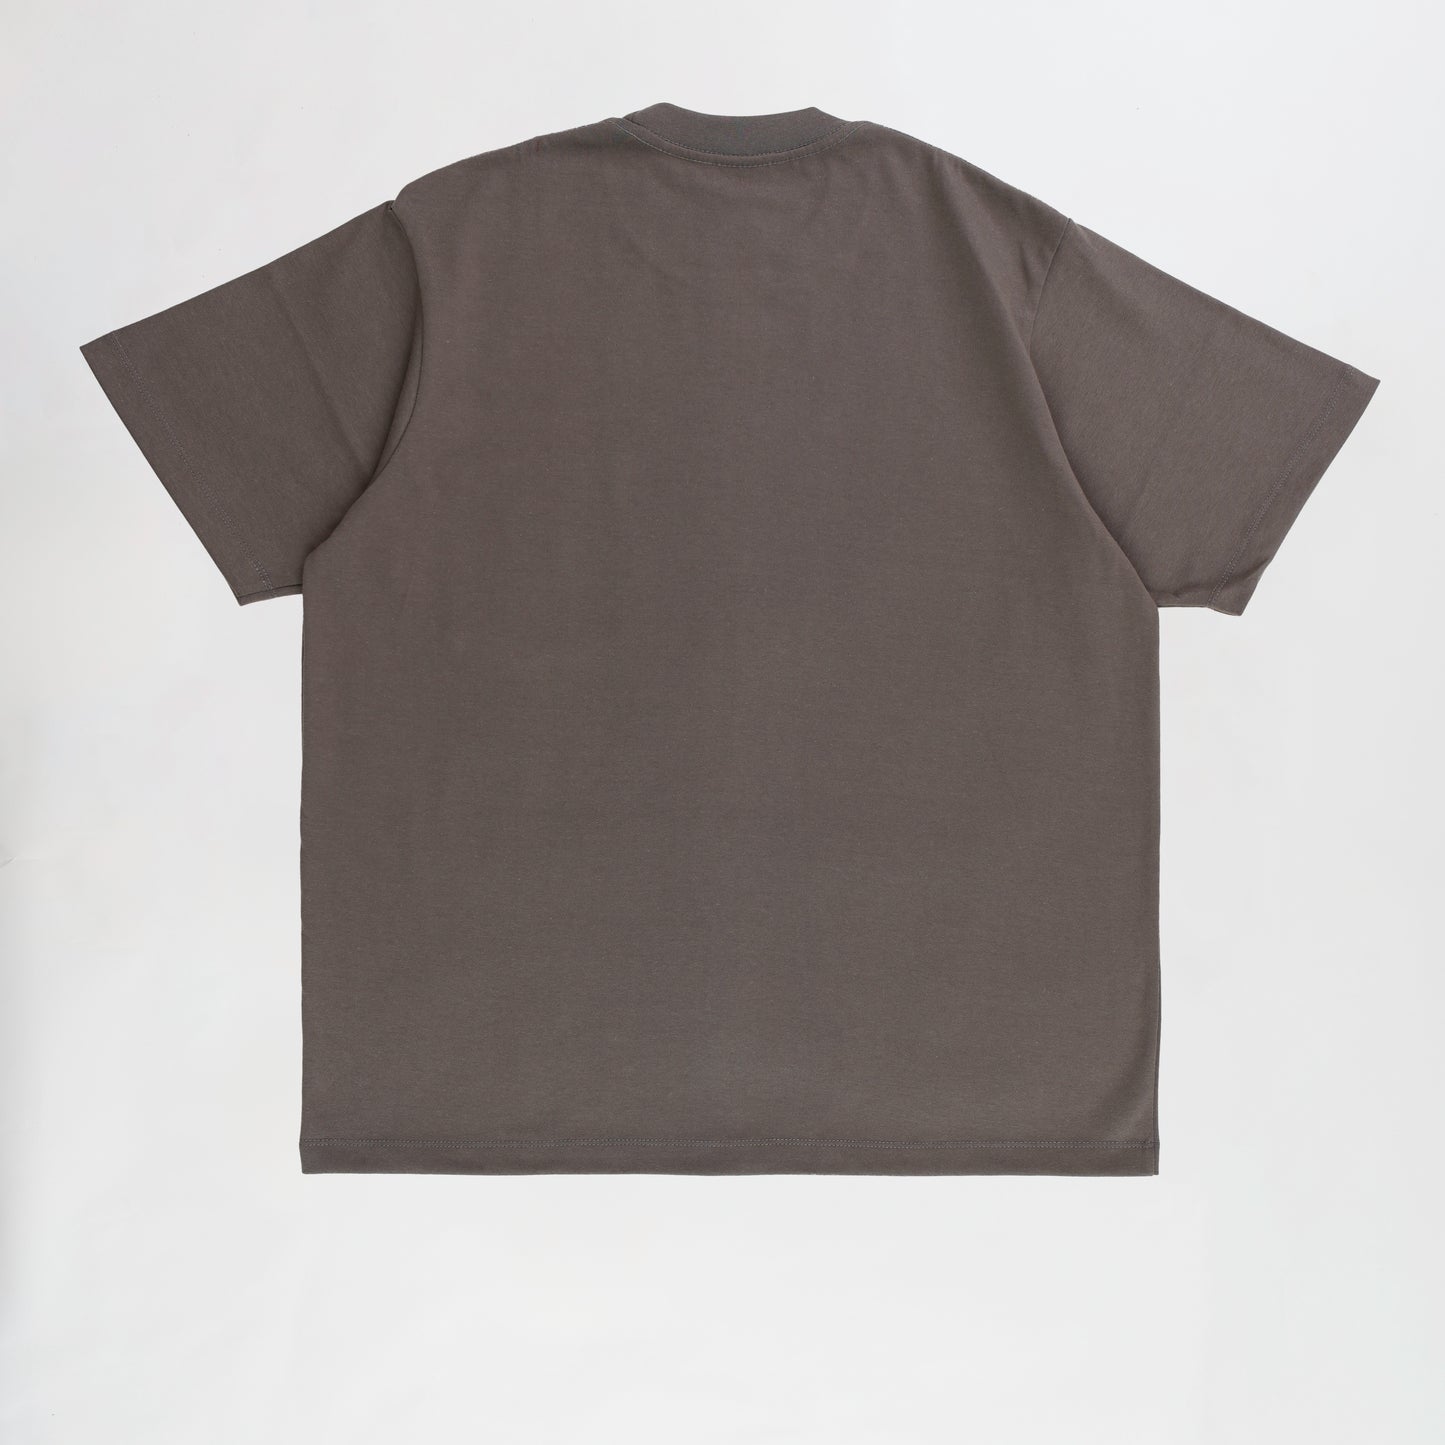 S/S Iron T-Shirt v2